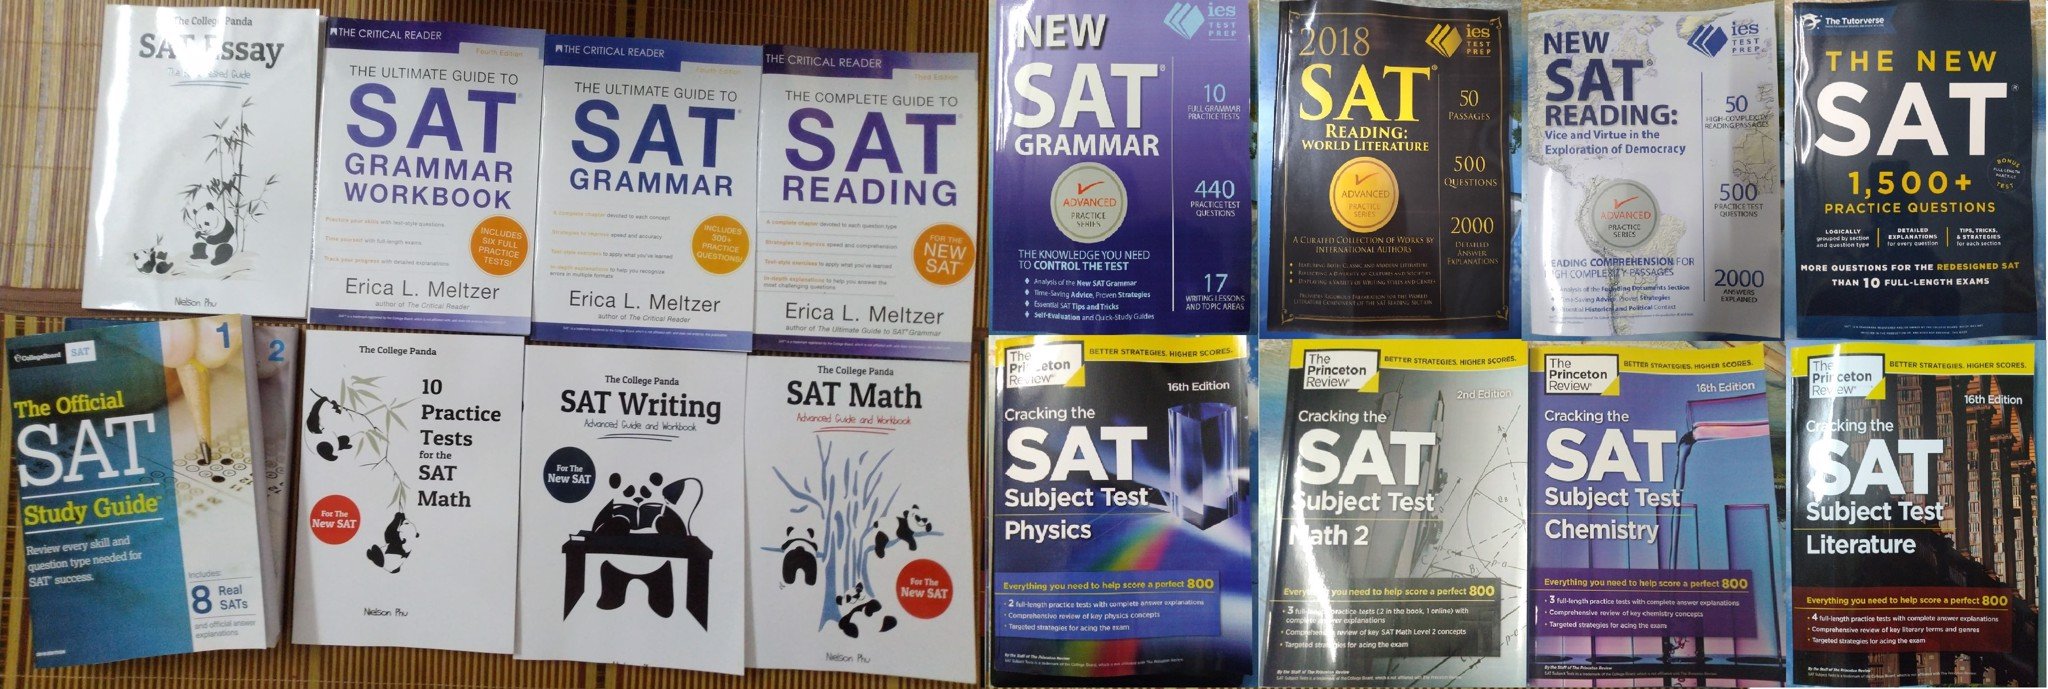 Ebooks Max30: Sách du học - Khóa học SAT, GRE, GMAT